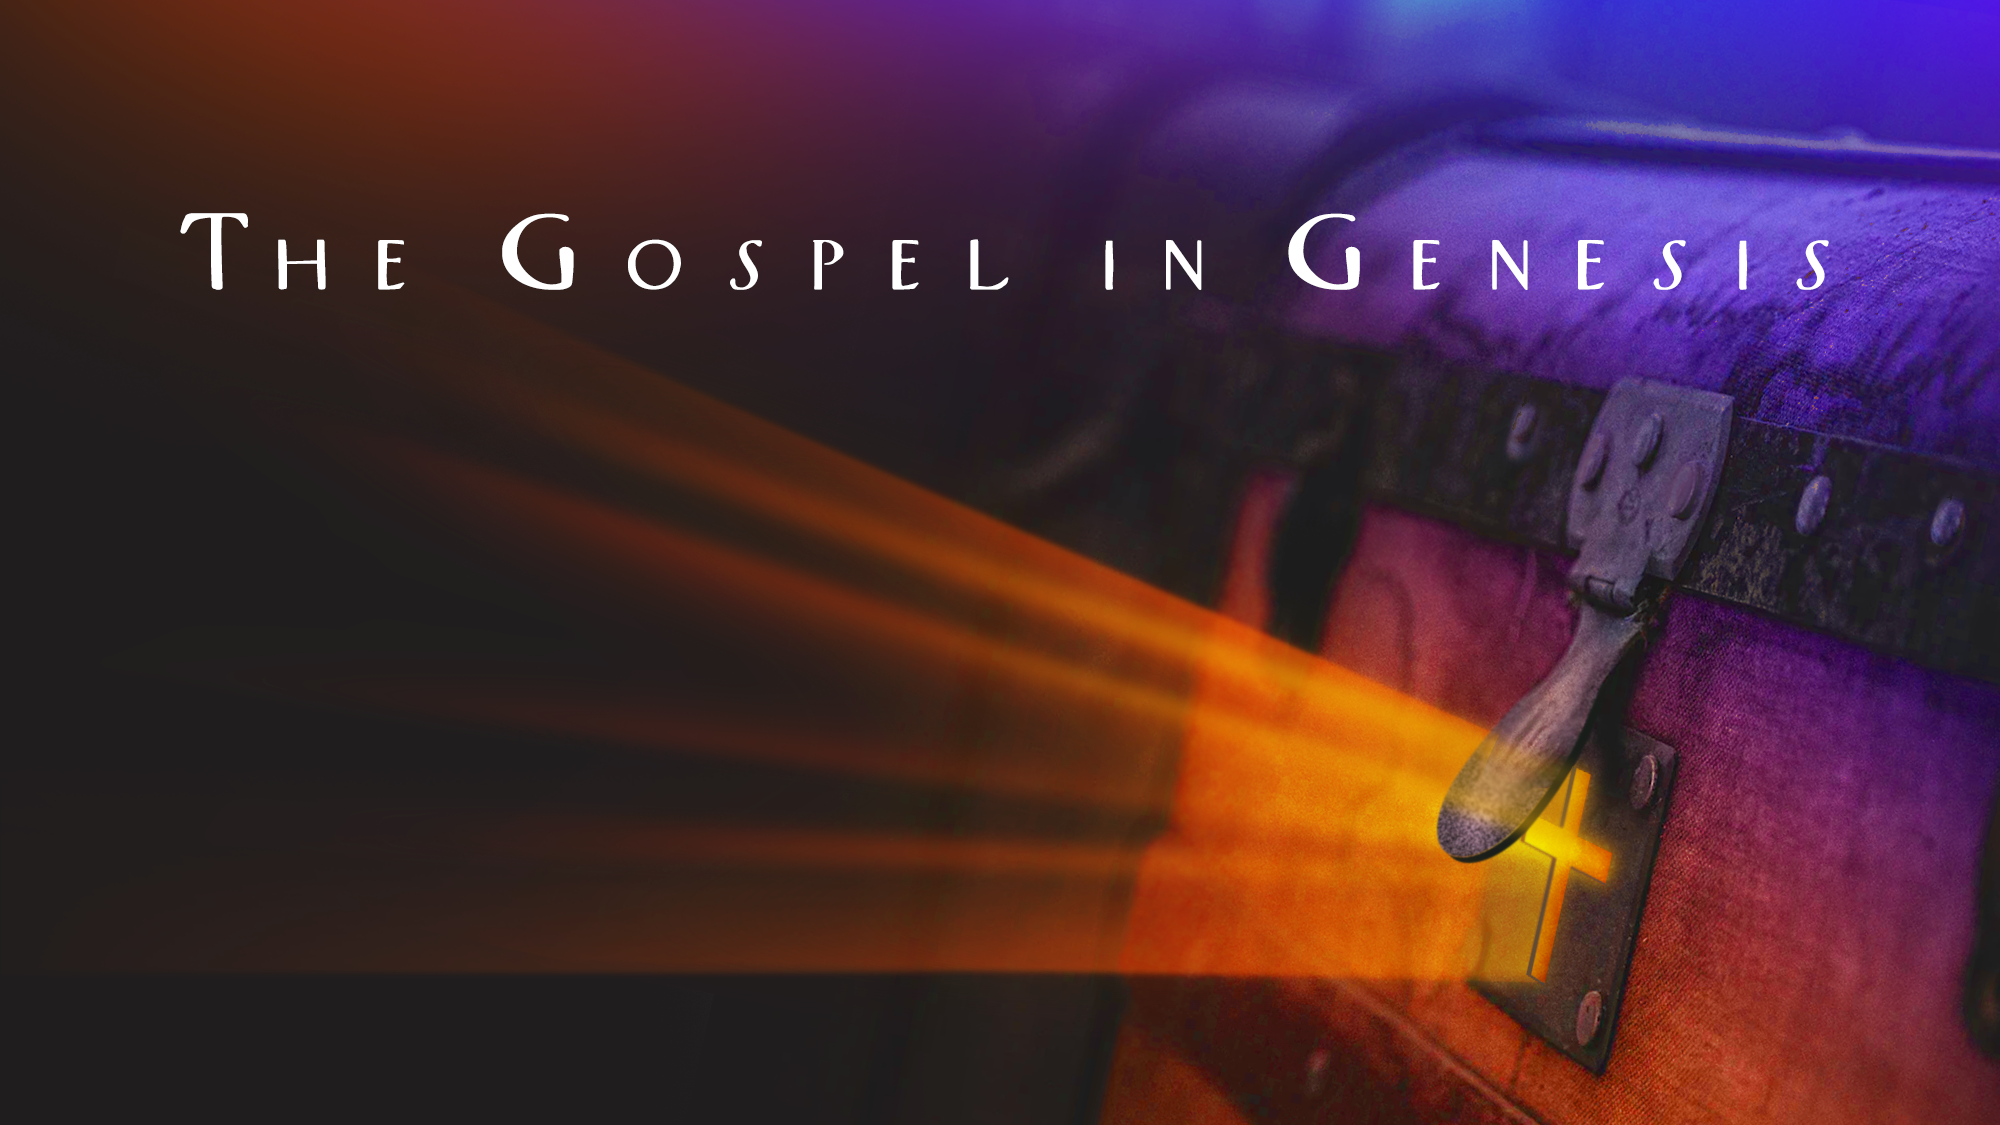 Gospel in Genesis